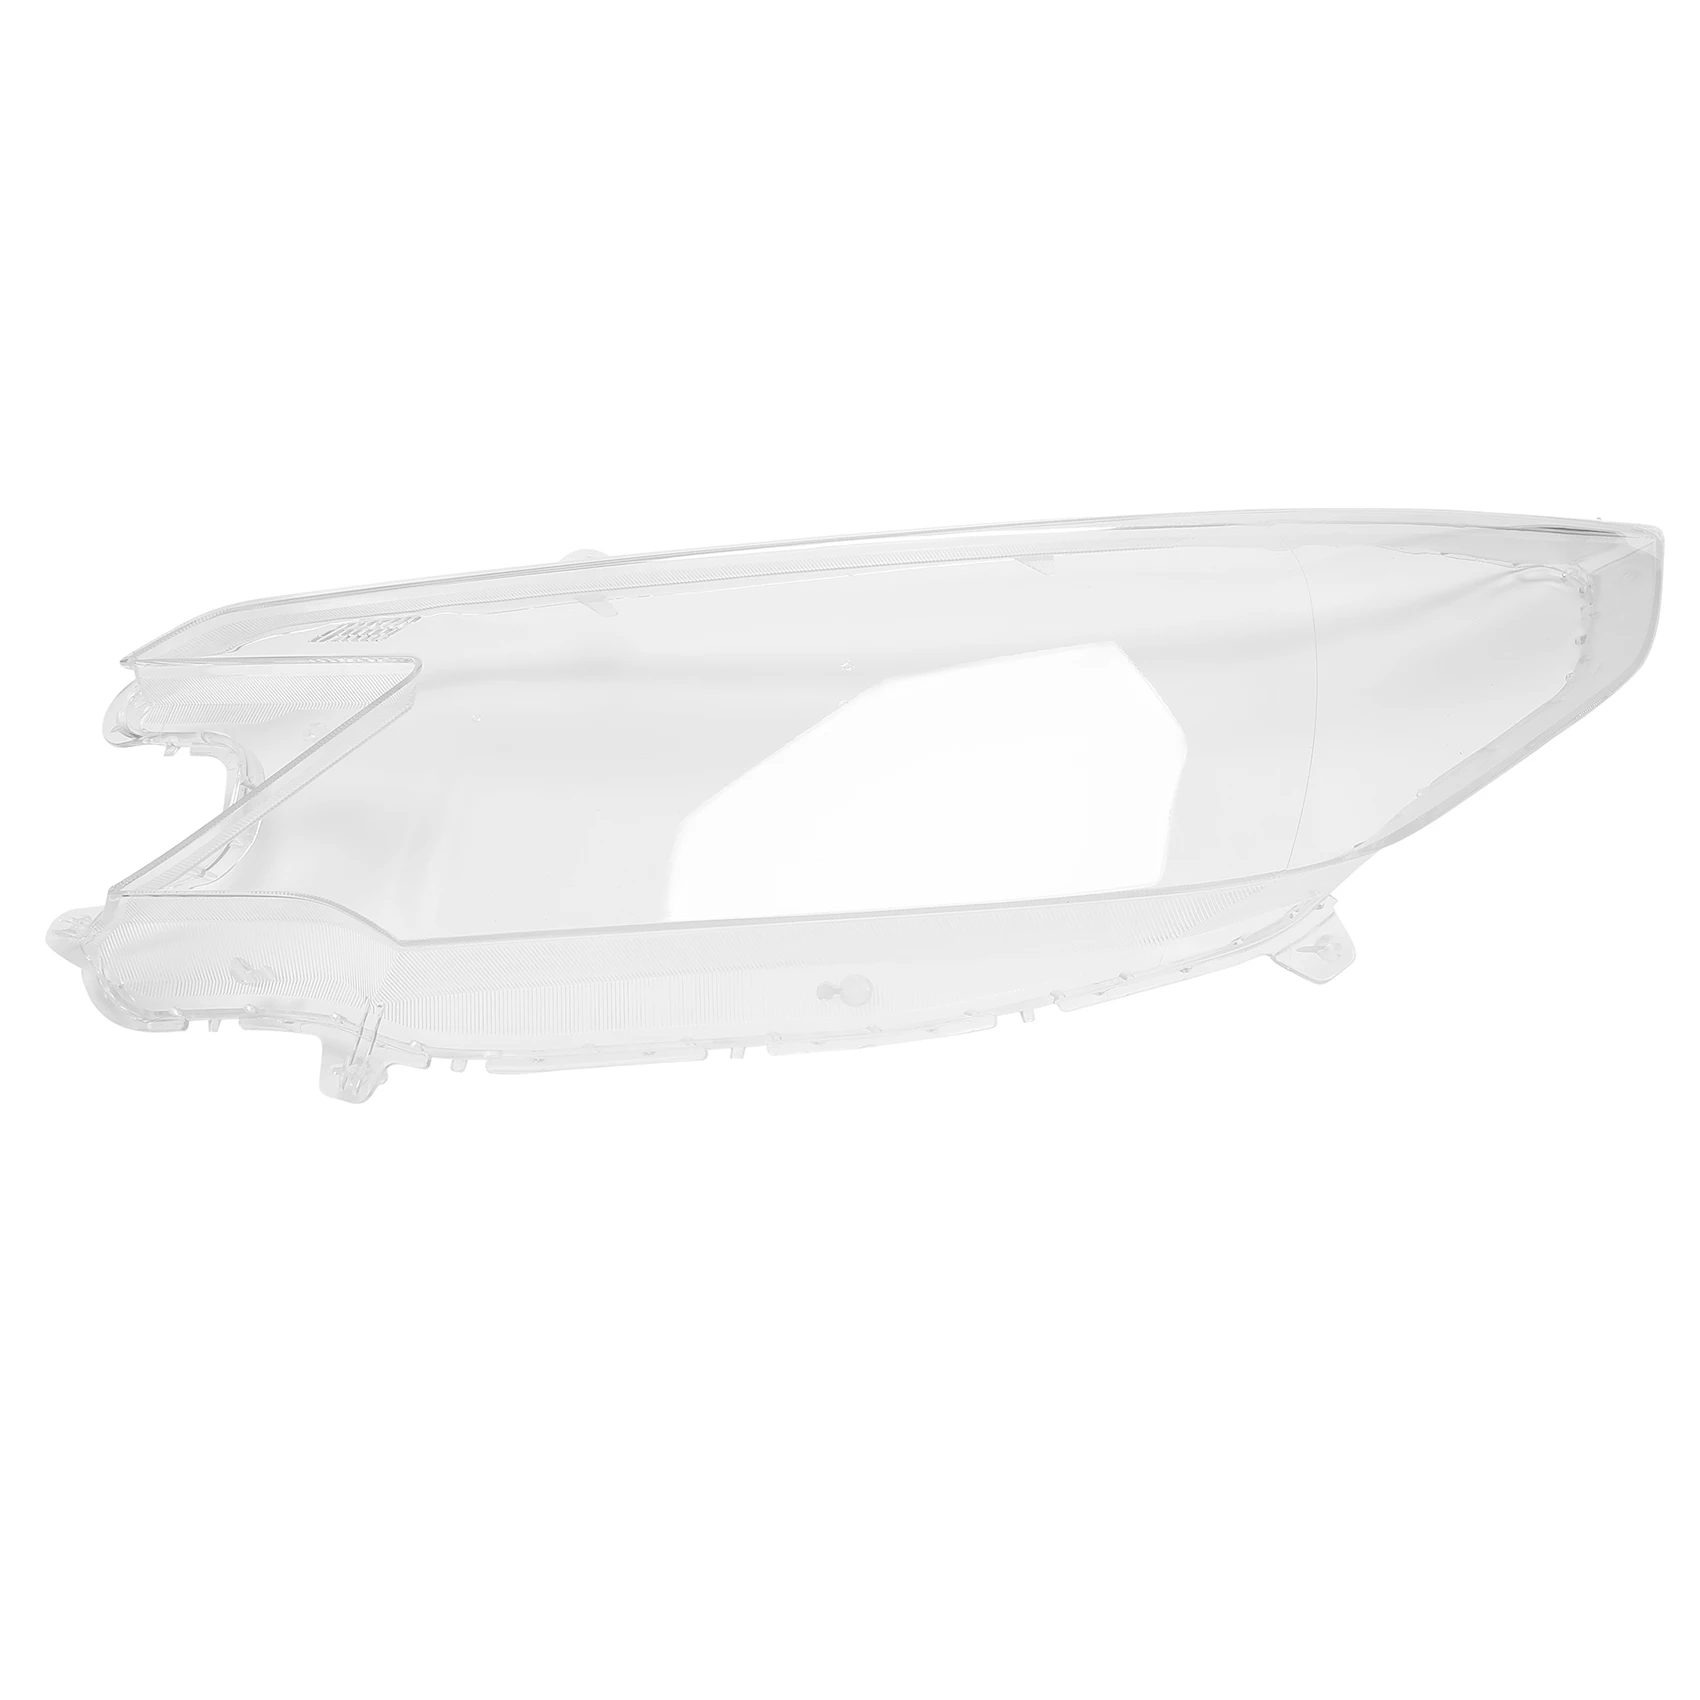 

Автомобильная Левая крышка фары, стеклянная фара, лампа головного света, ксеноновая крышка объектива для Honda CRV 2012 2013 2014